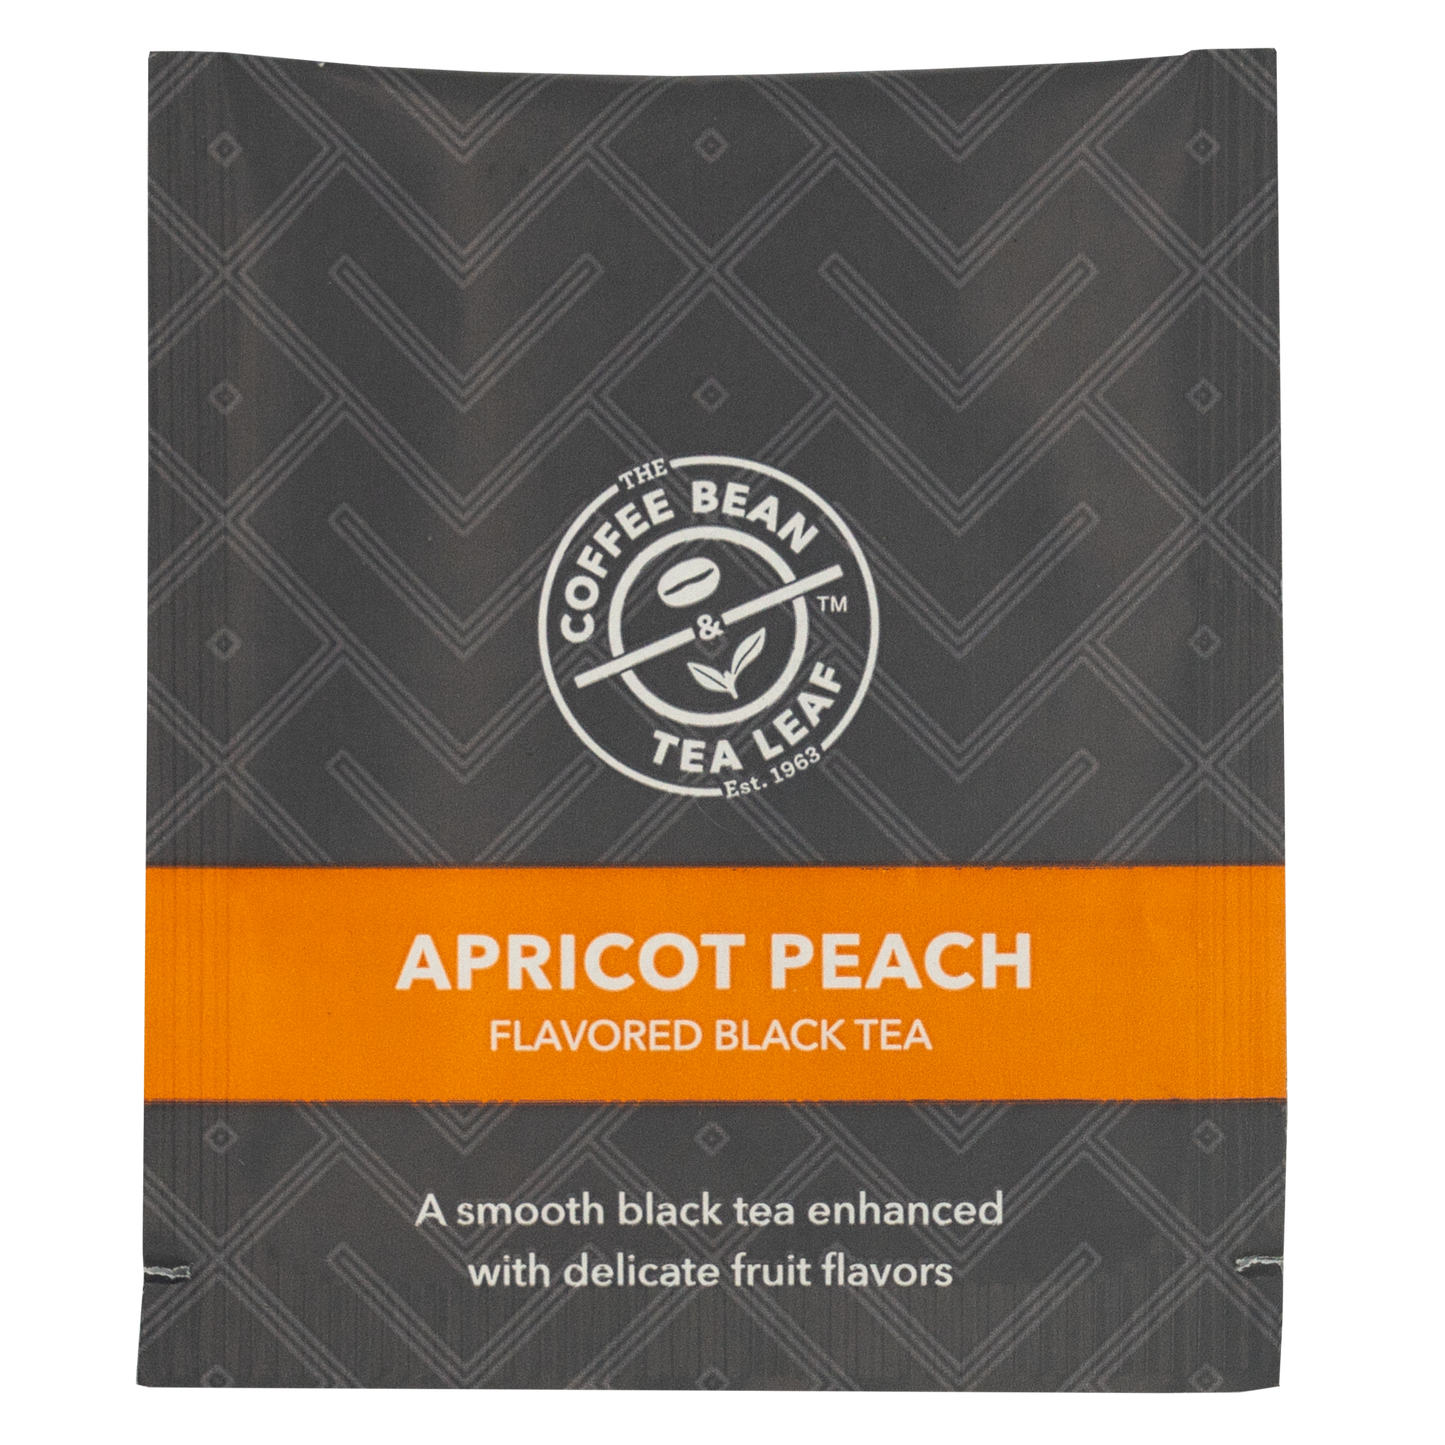 CBTL Apricot Peach Tea Bags